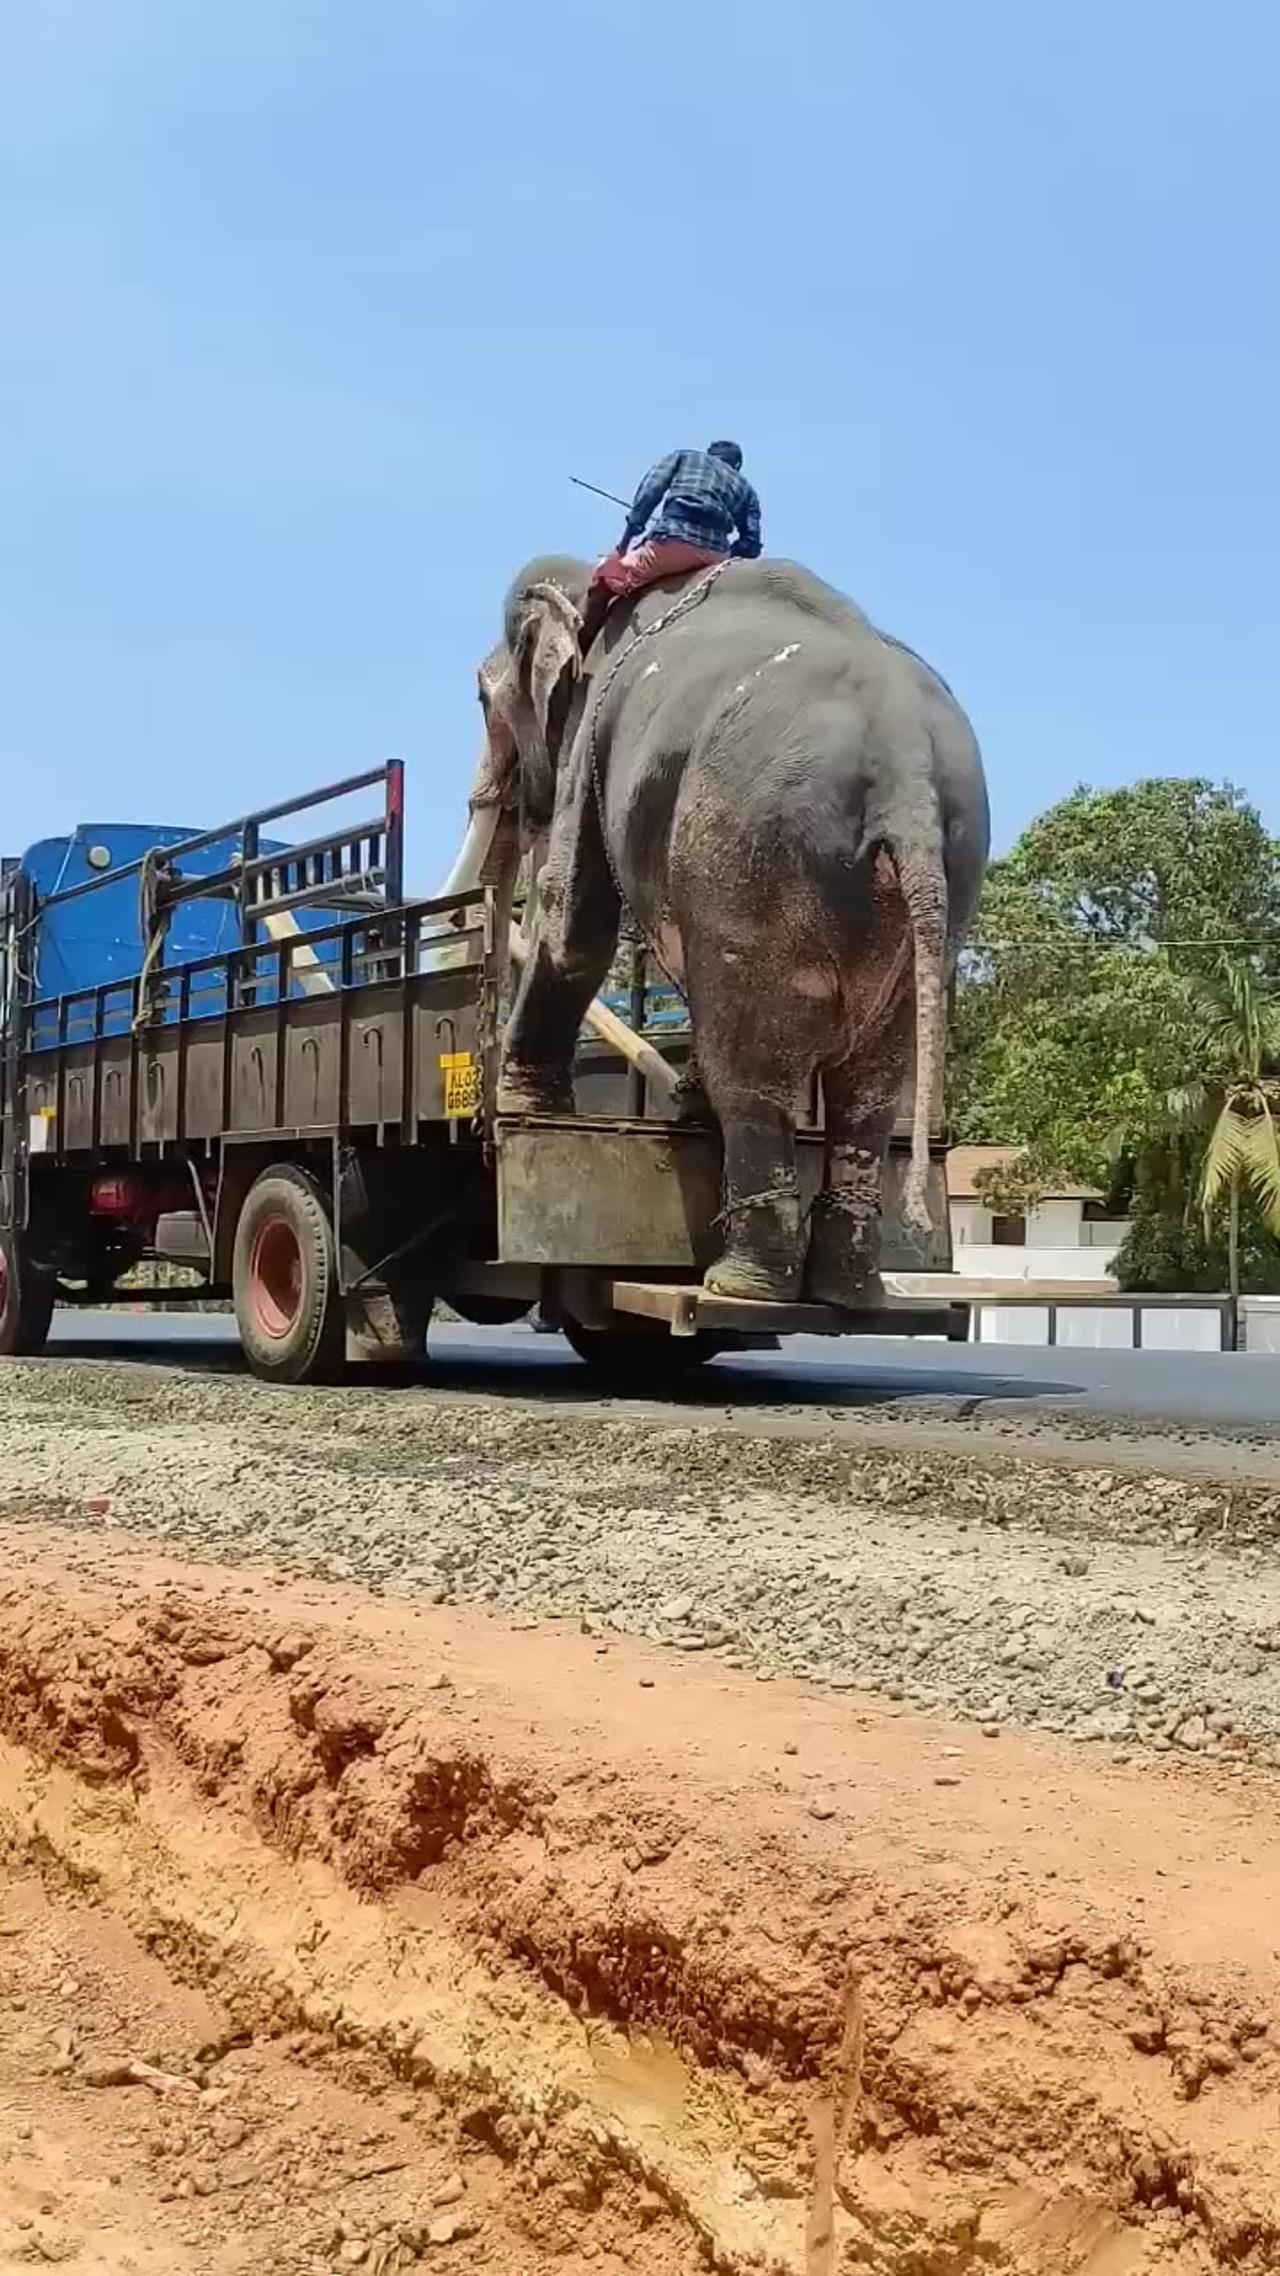 Elephant on the truck 🚛 #shorts